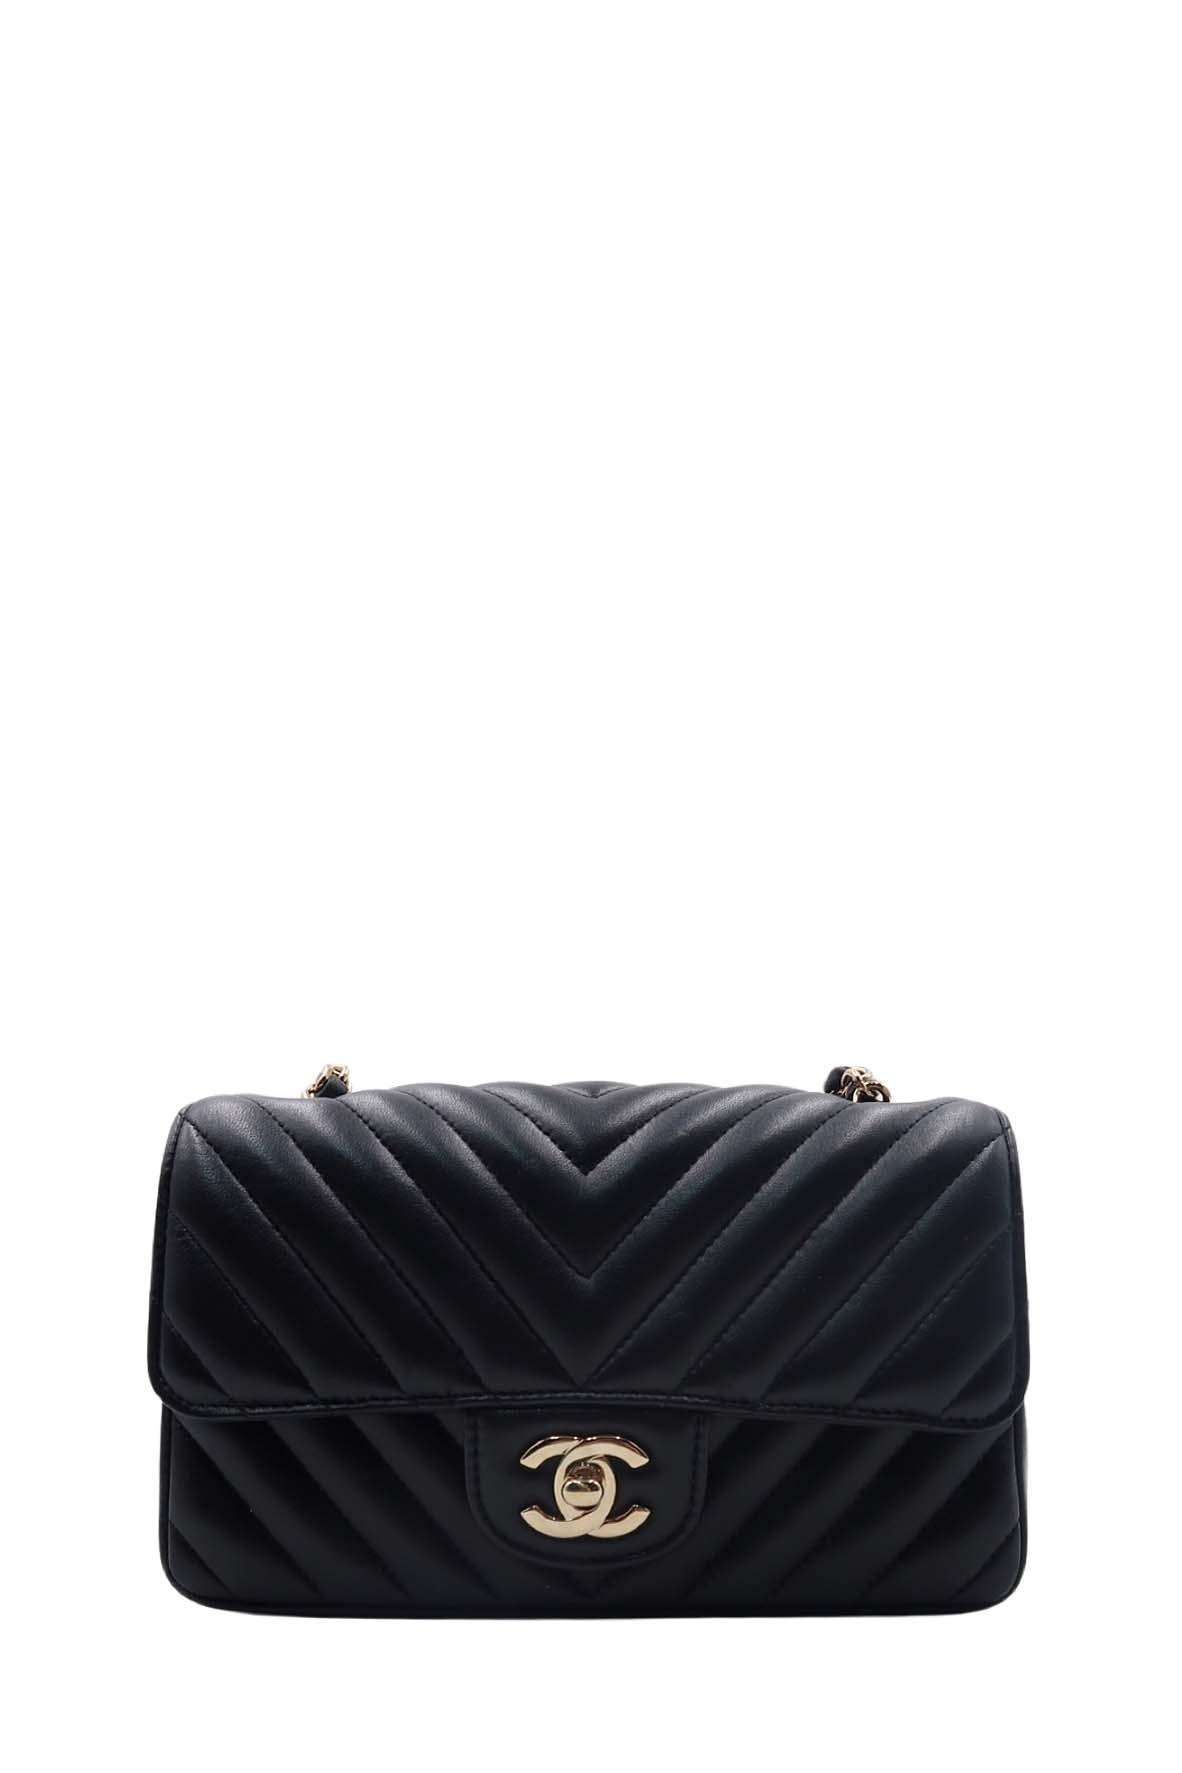 Chanel  Mini Square Classic Flap Bag  Black Caviar  GHW  Bagista